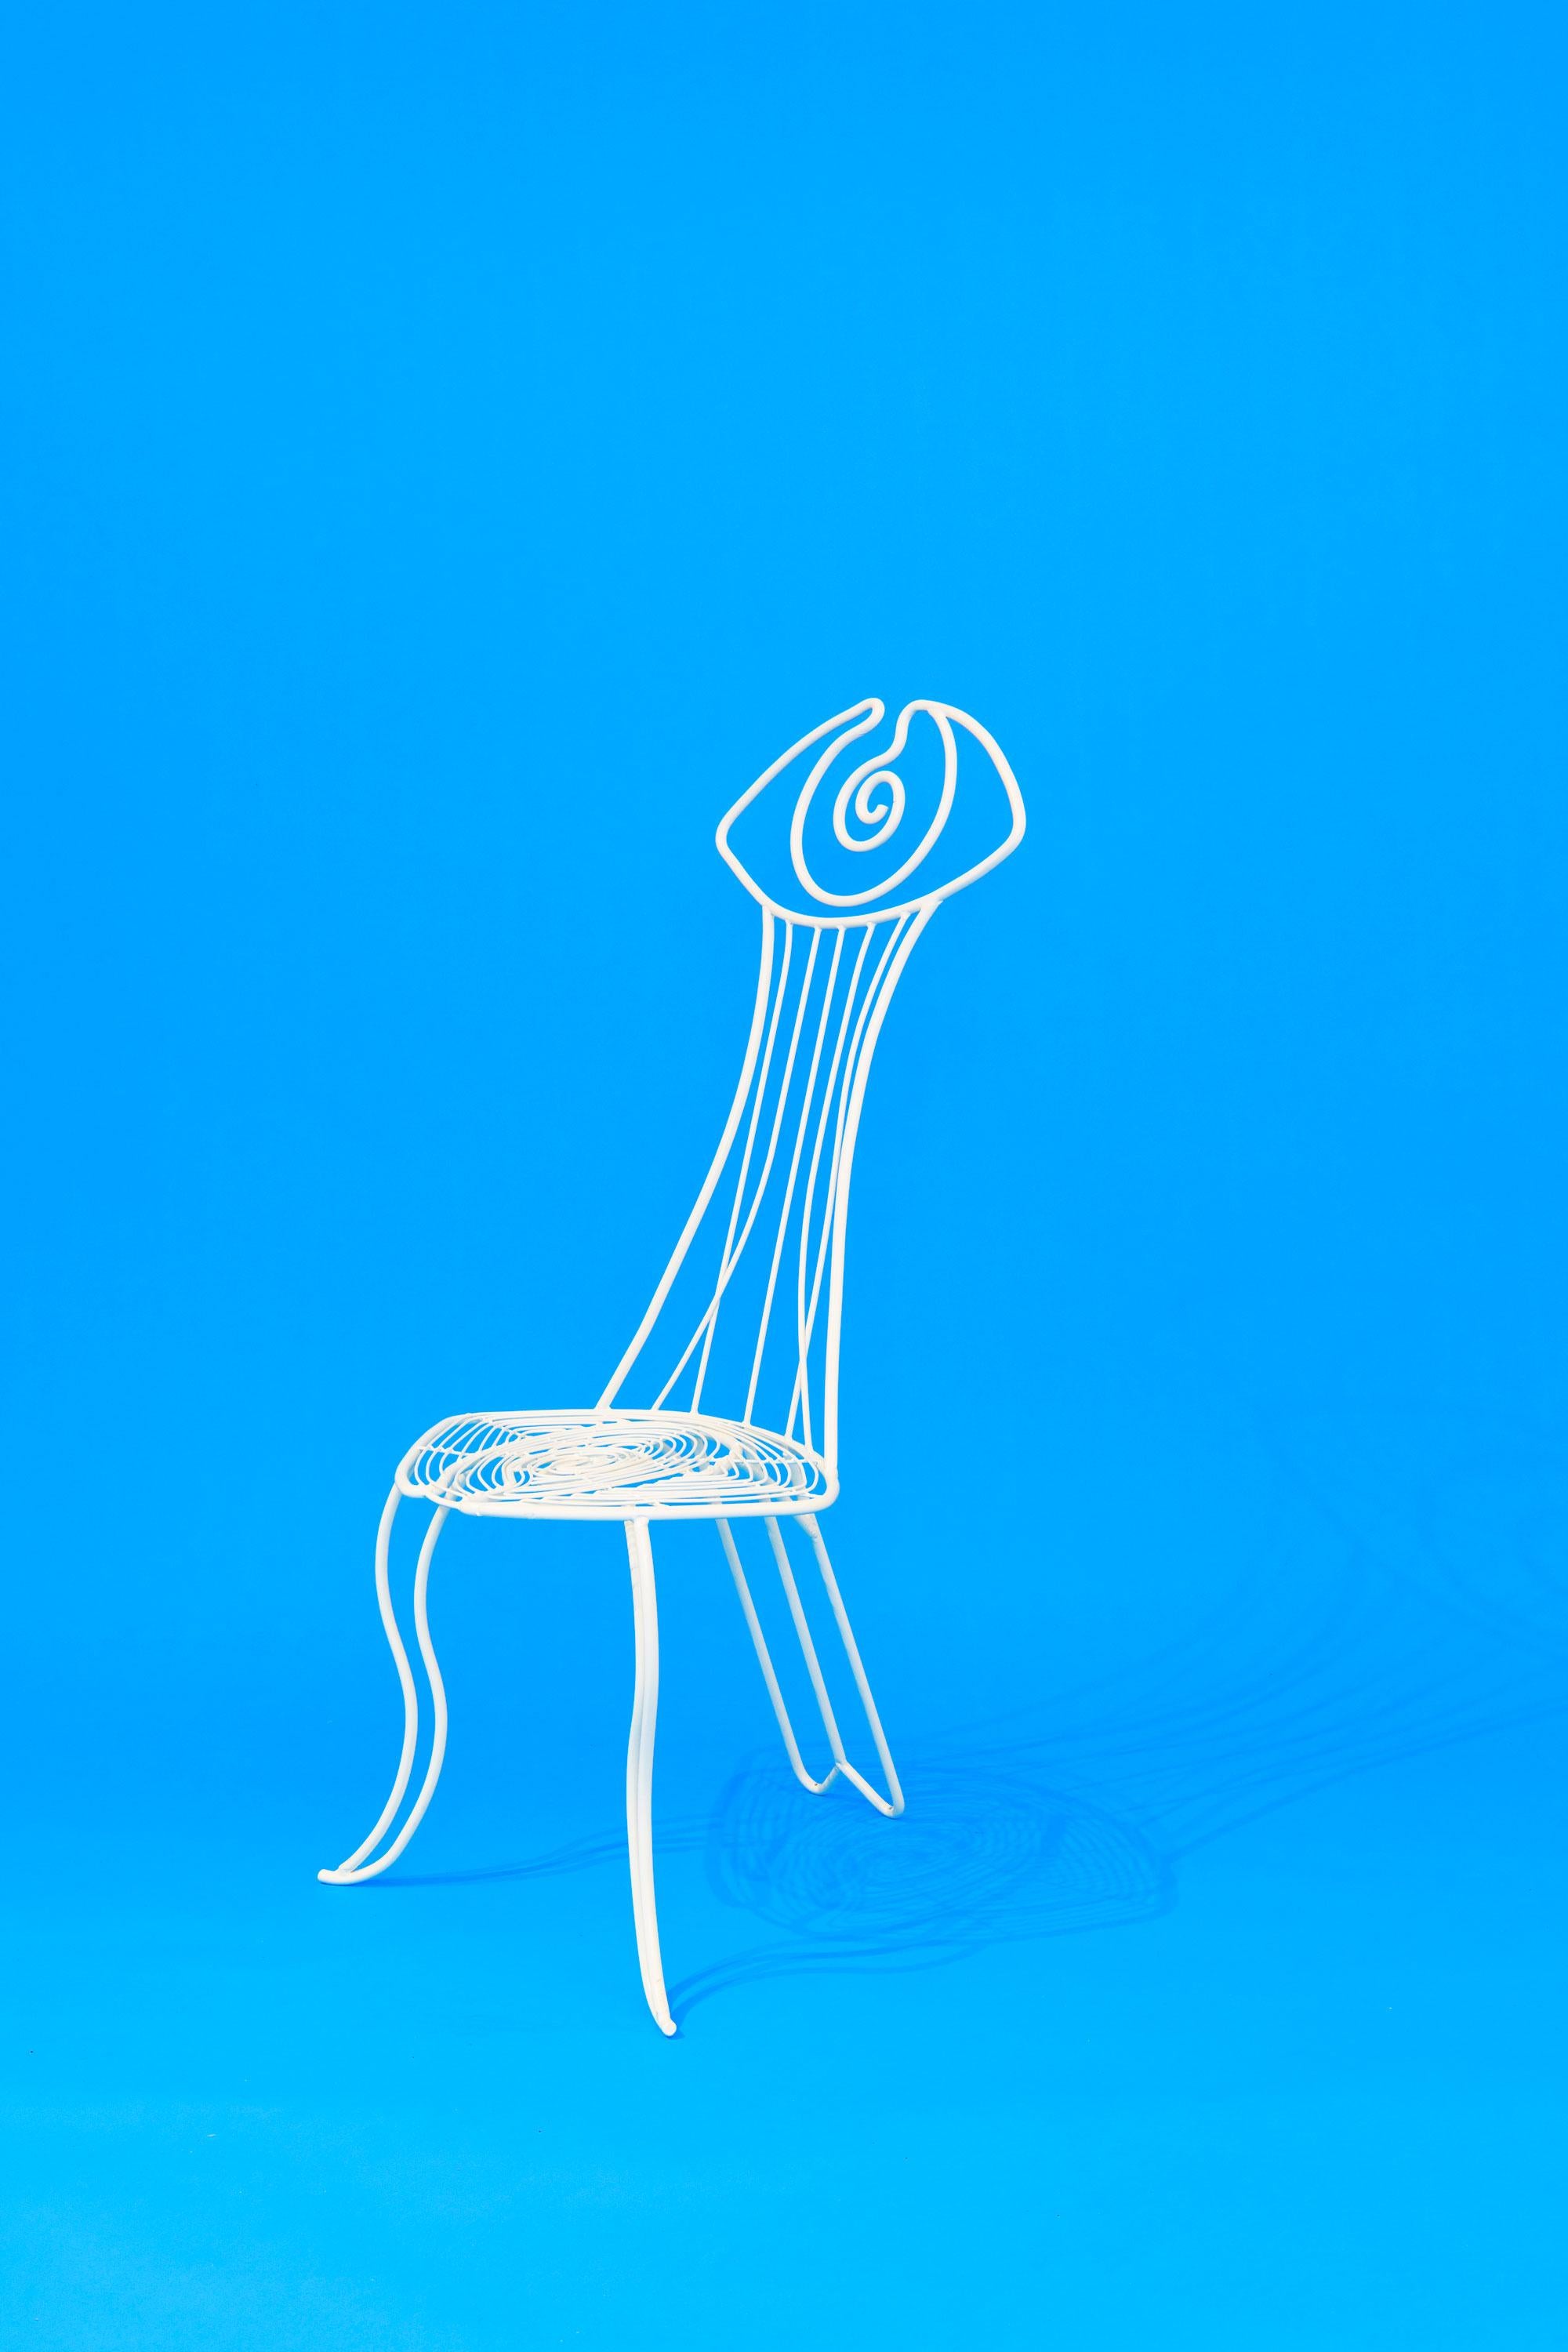 Powder-Coated Eye Chair 3 (Charlotte Colbert x Maison Colbert) For Sale